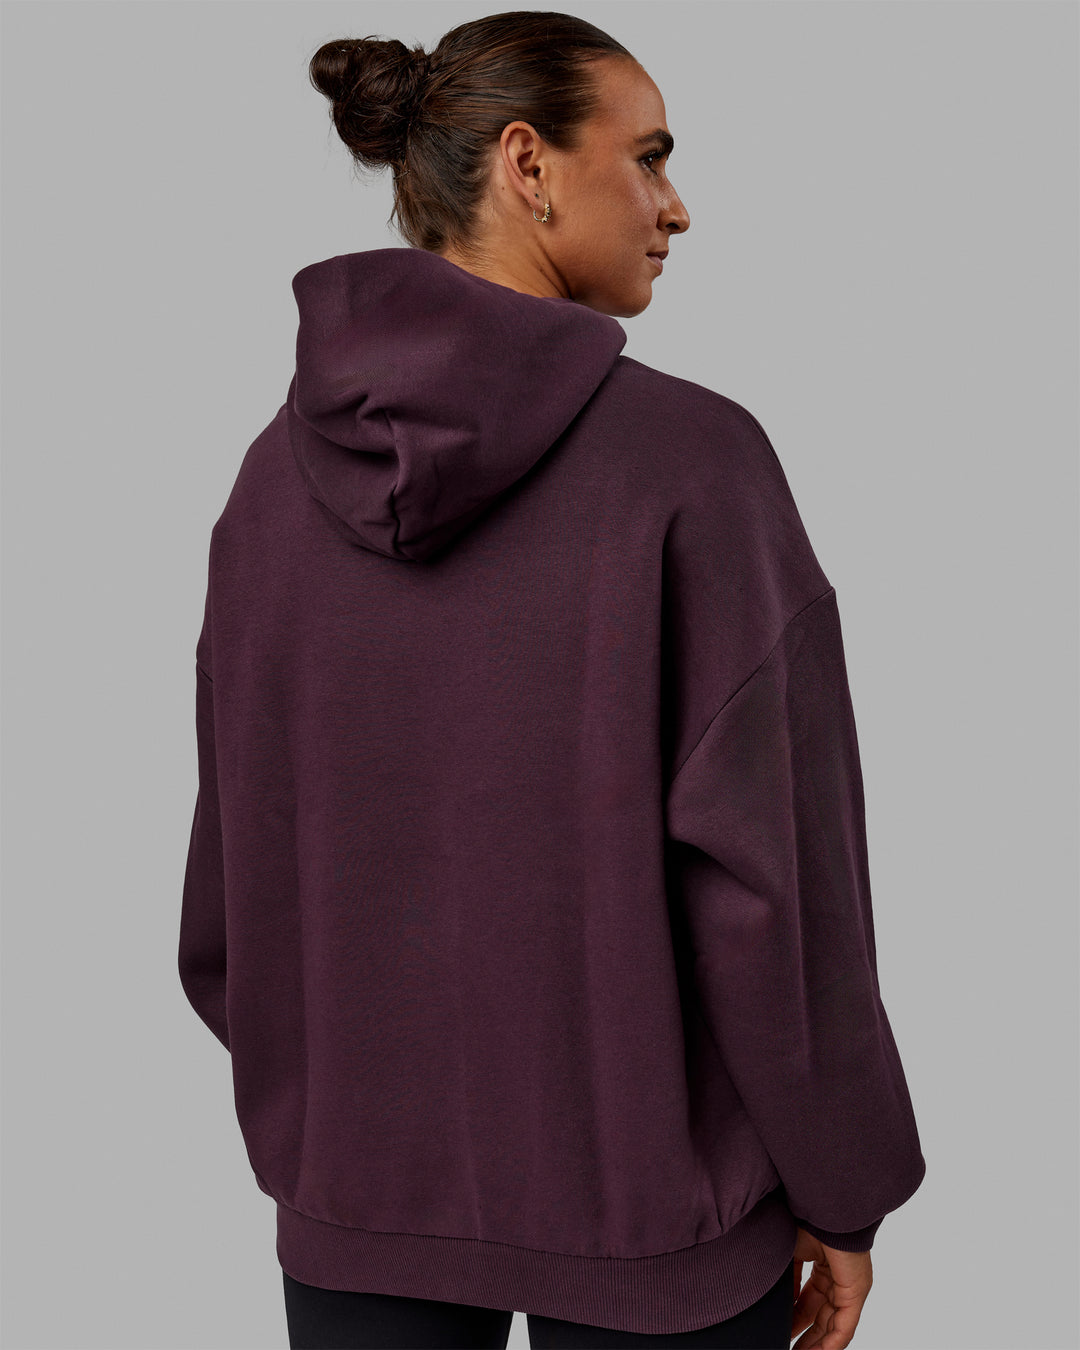 Woman wearing Unisex 1% Better Hoodie Oversize - Midnight Plum